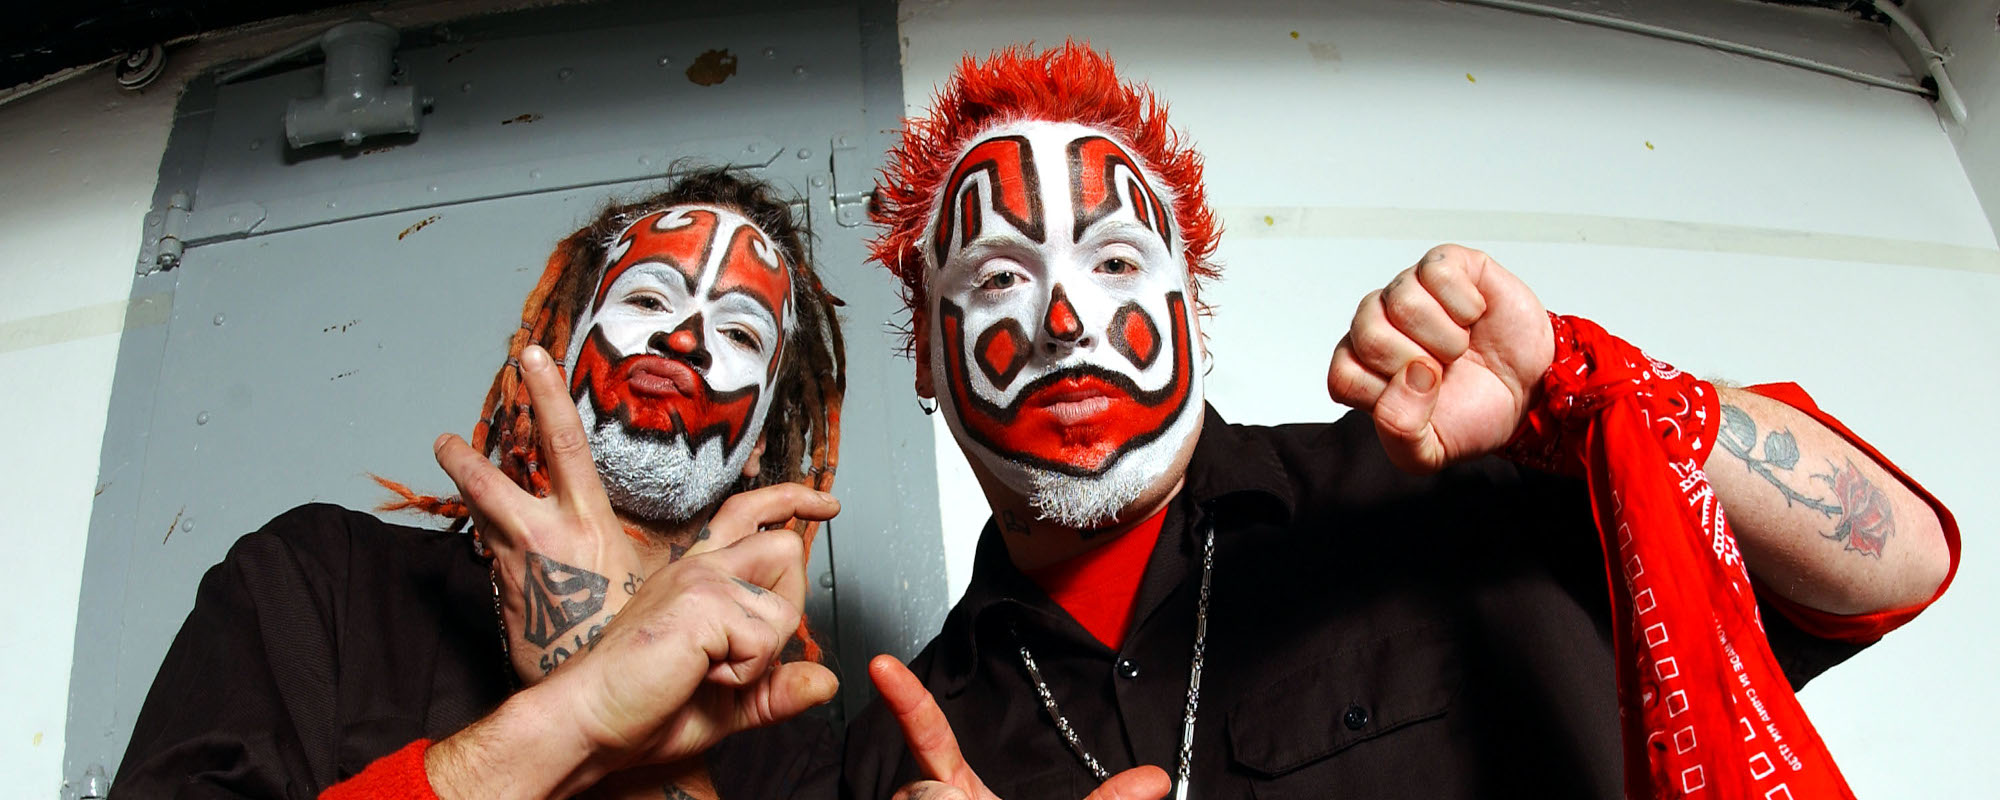 Behind the Band Name: Insane Clown Posse